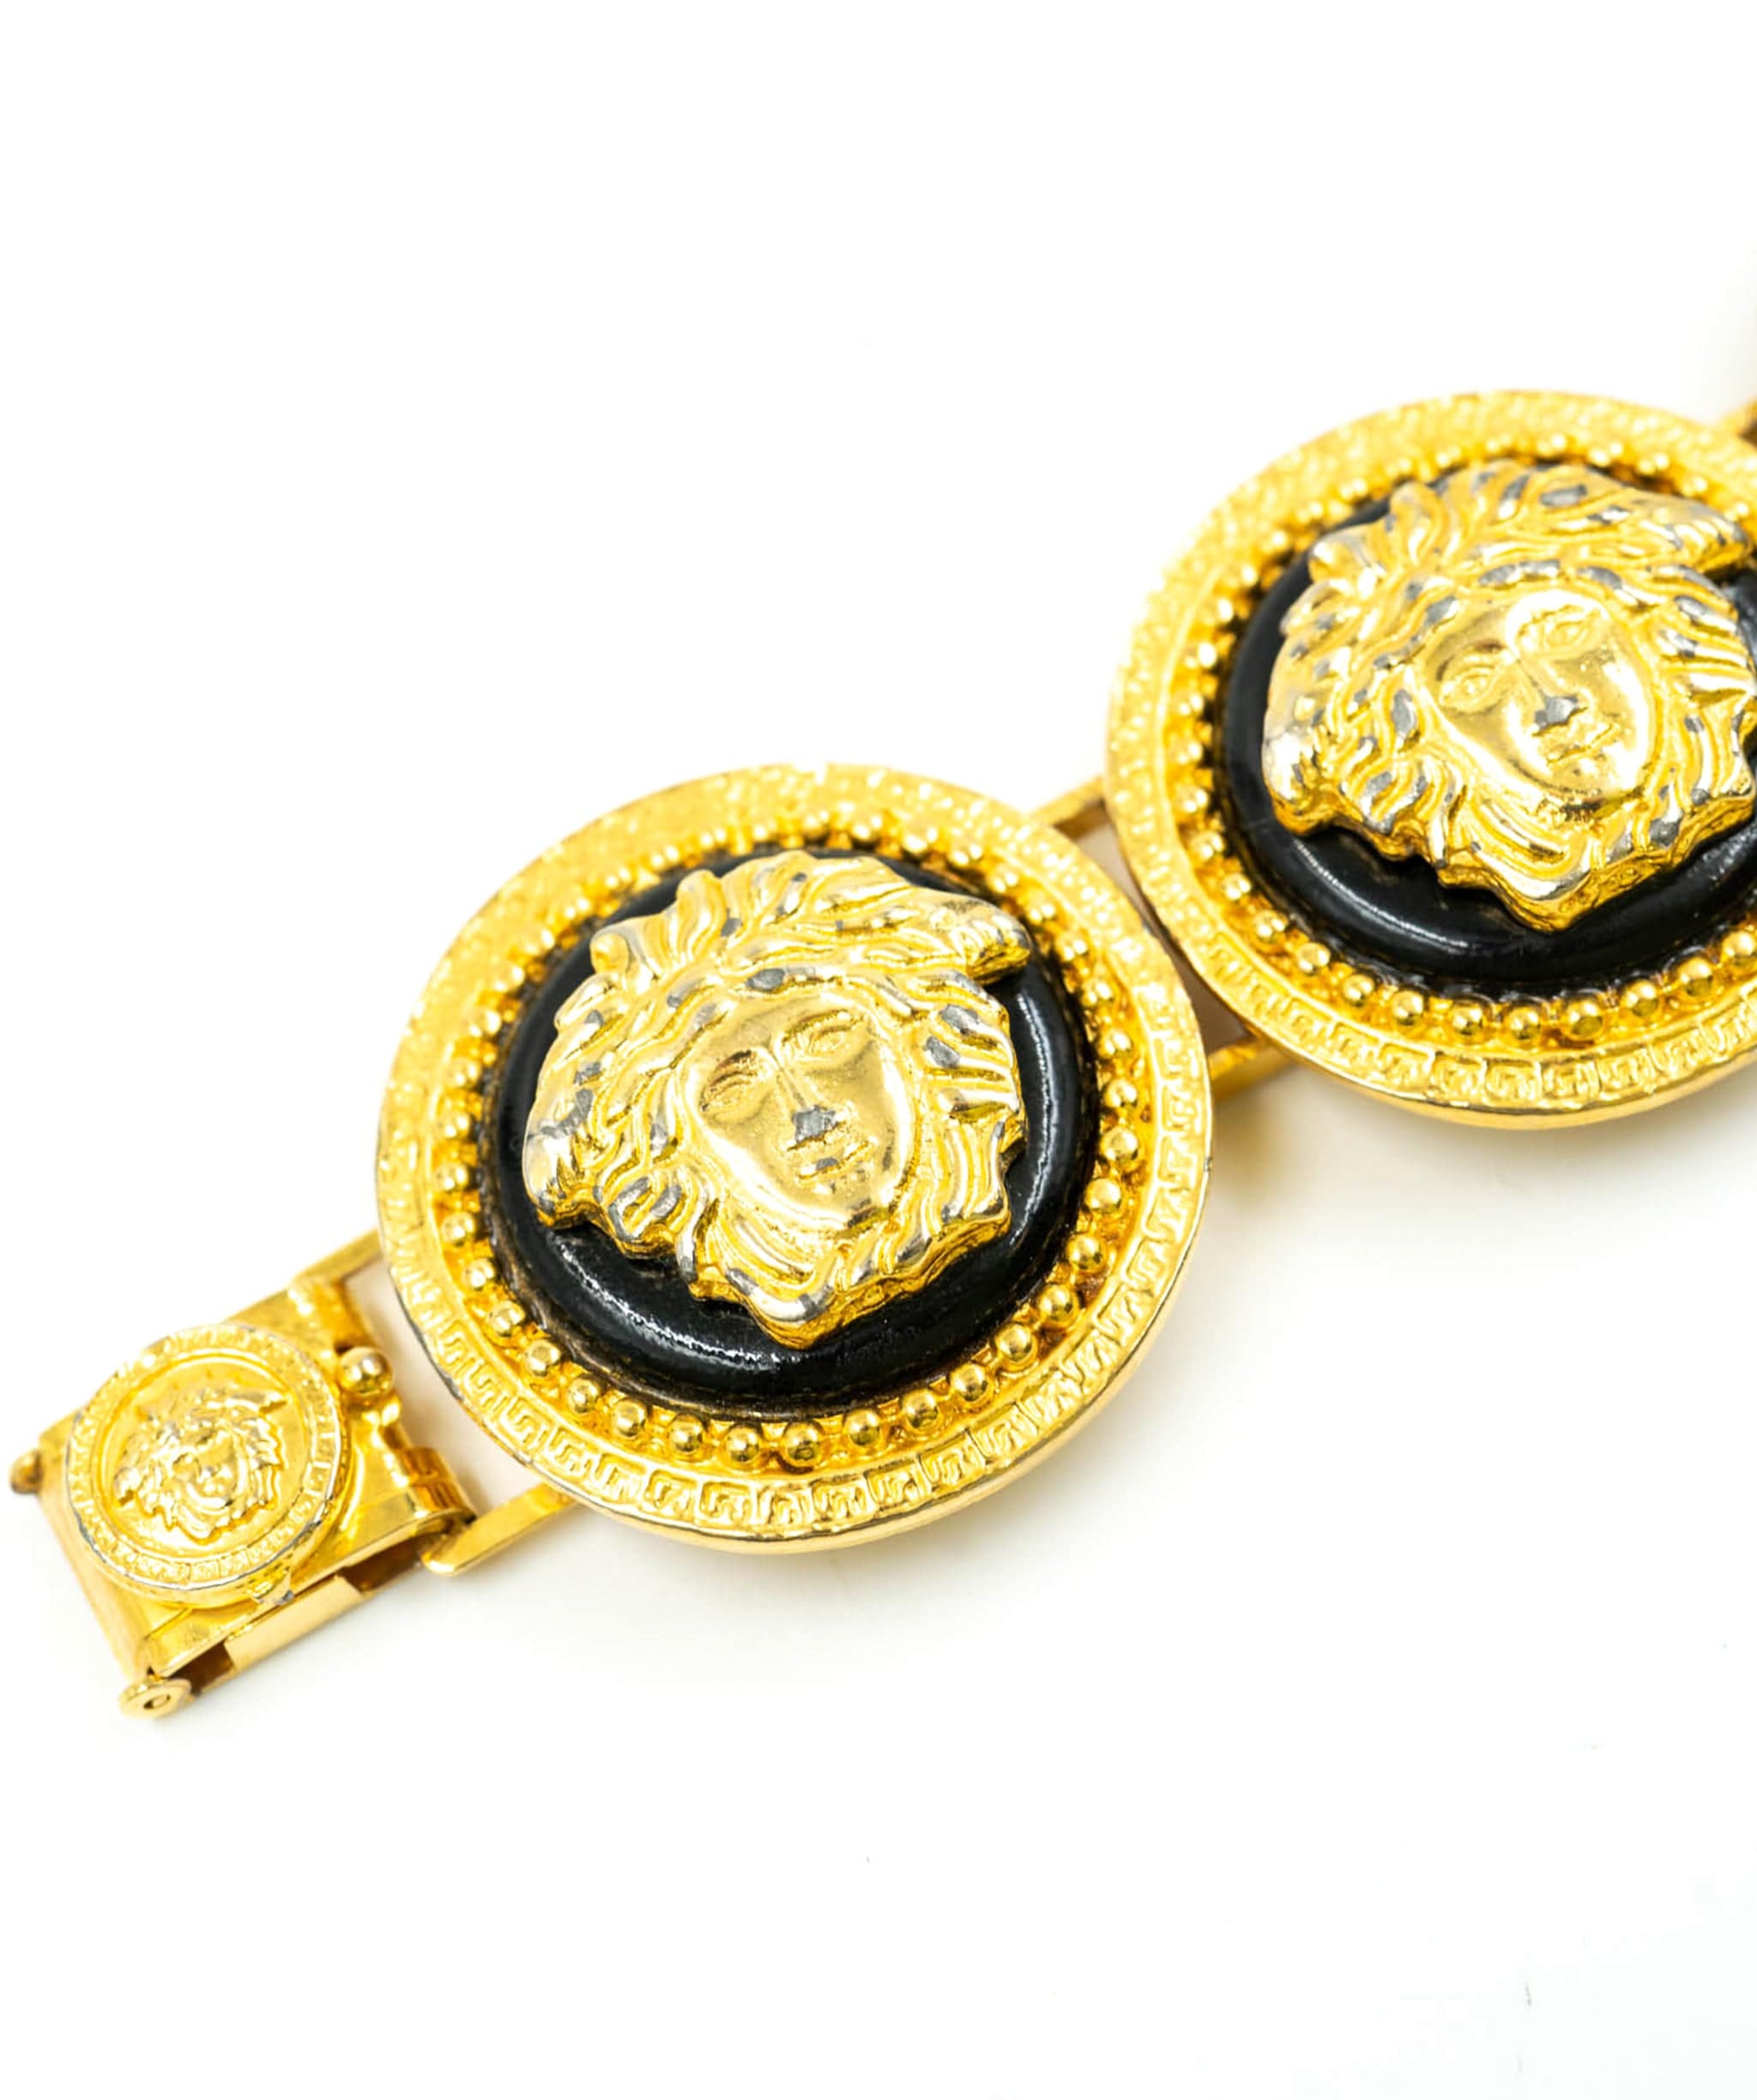 Versace Gianni Versace Medusa Bracelet Gold Black ASL4885